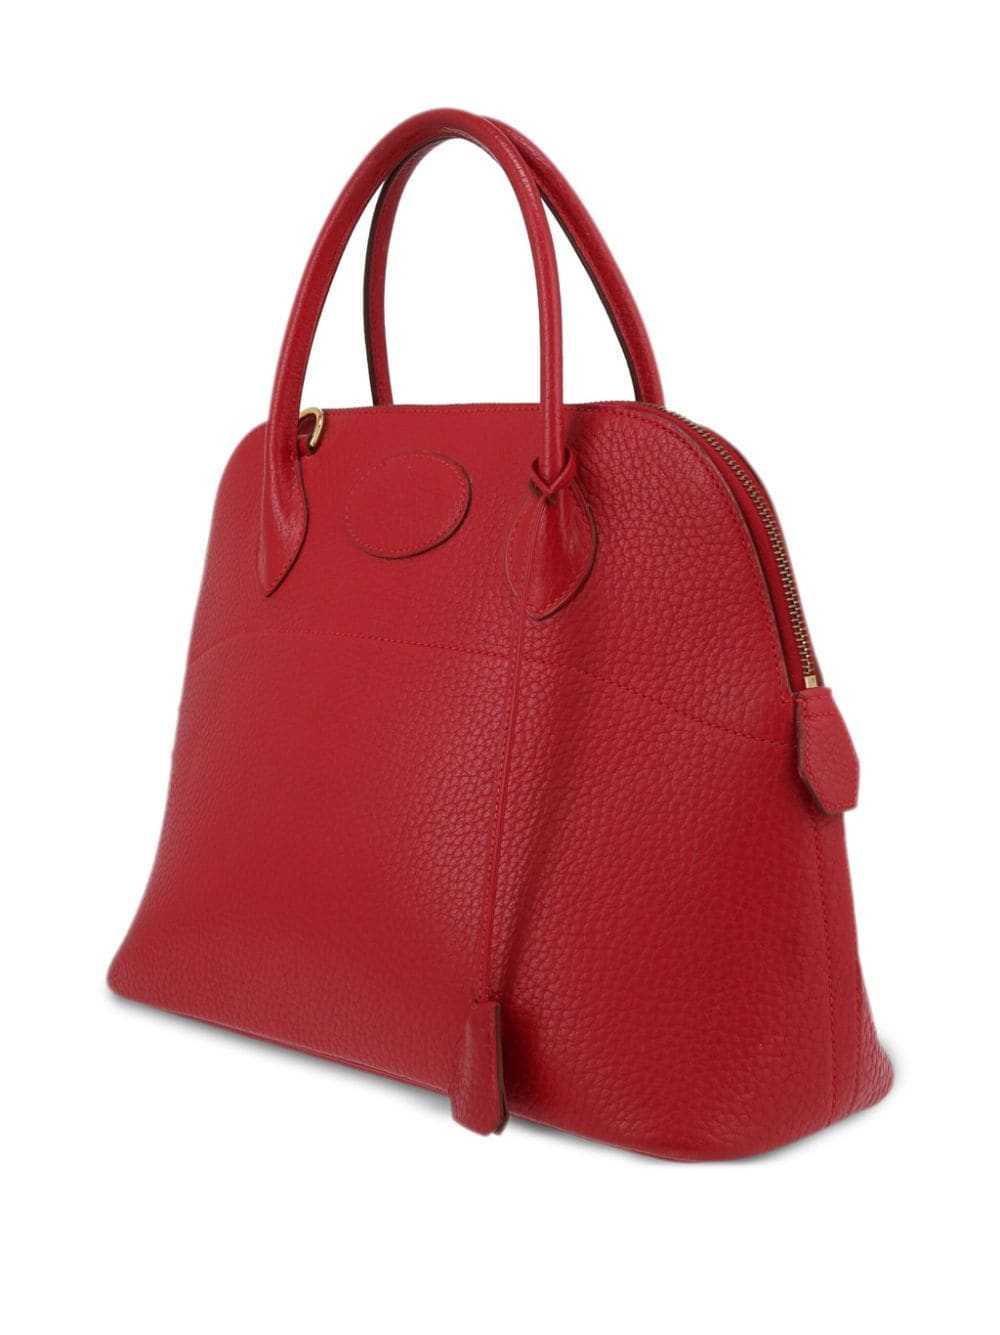 Hermès Pre-Owned 1994 Bolide 31 handbag - Red - image 5